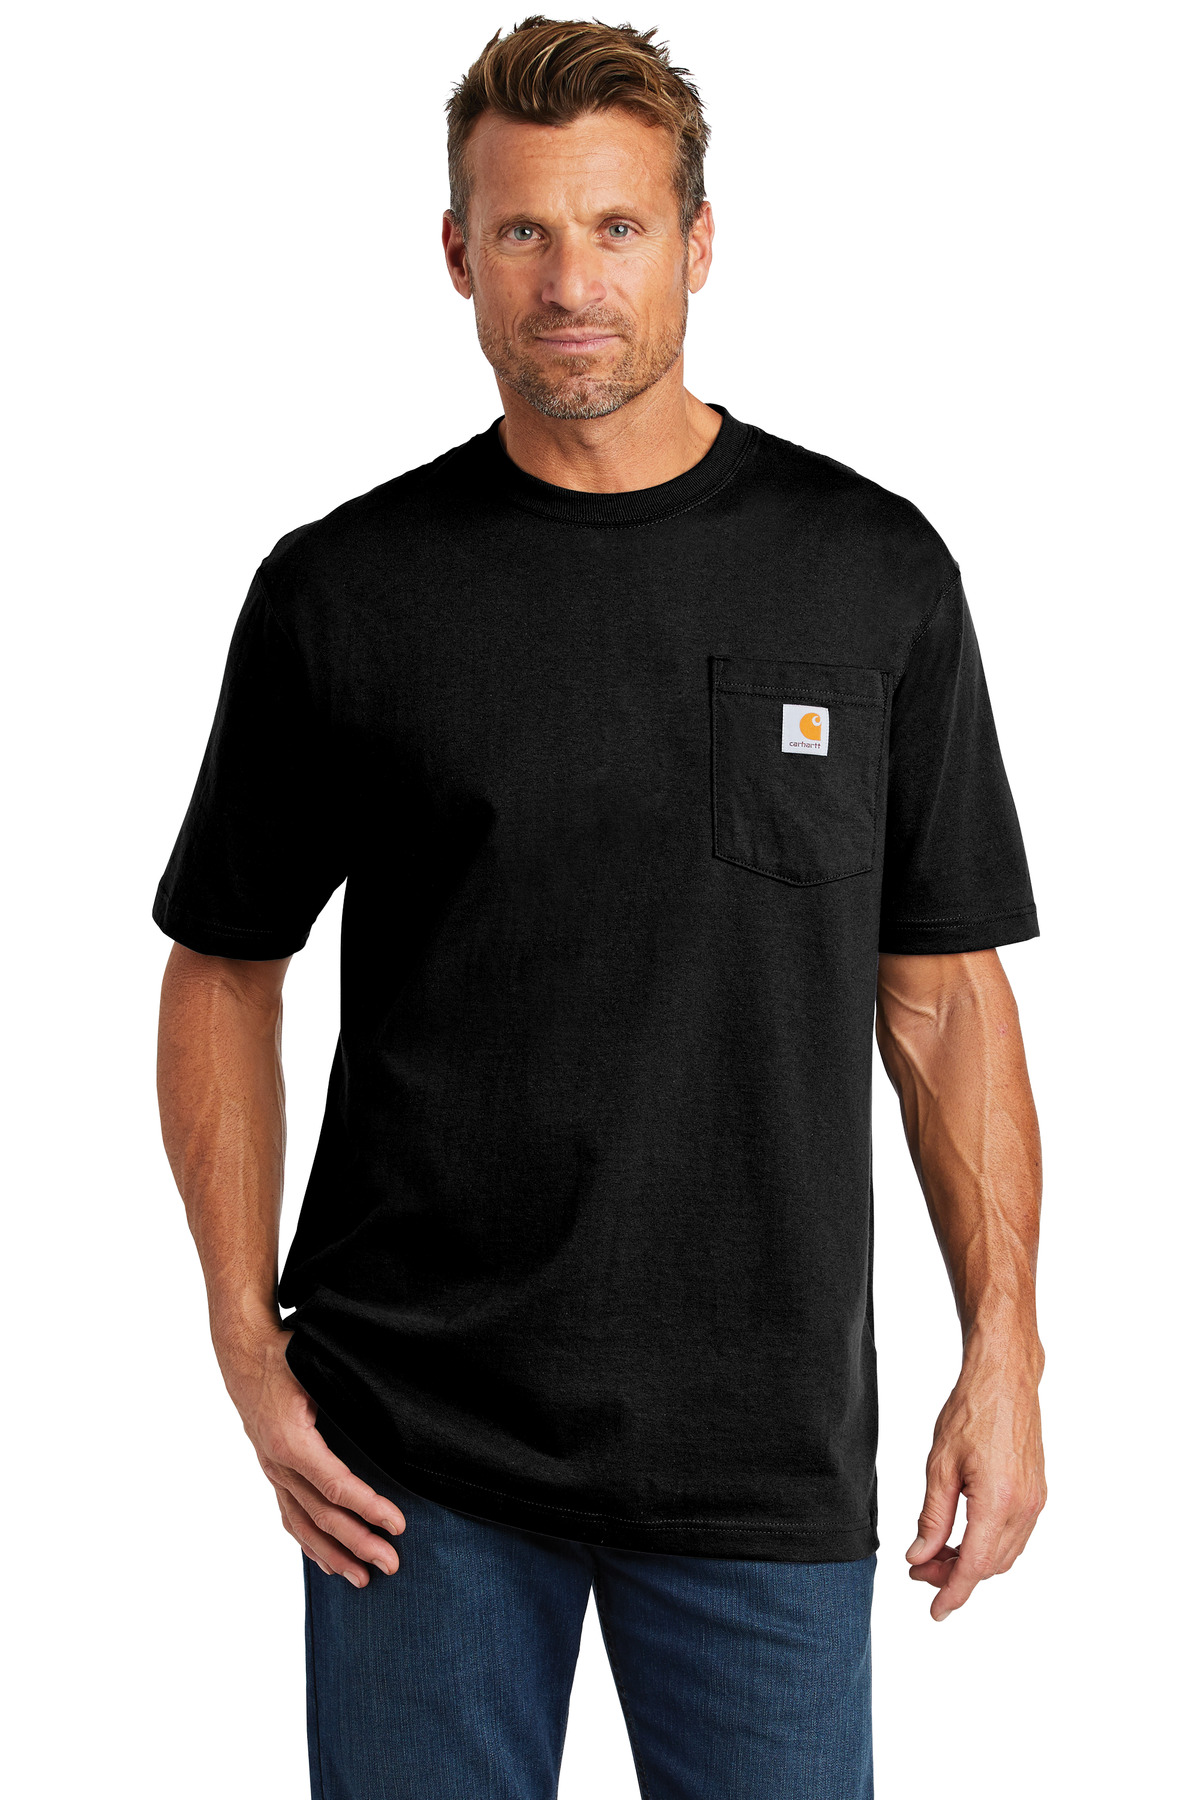 Carhartt Workwear Pocket Short Sleeve T-Shirt-